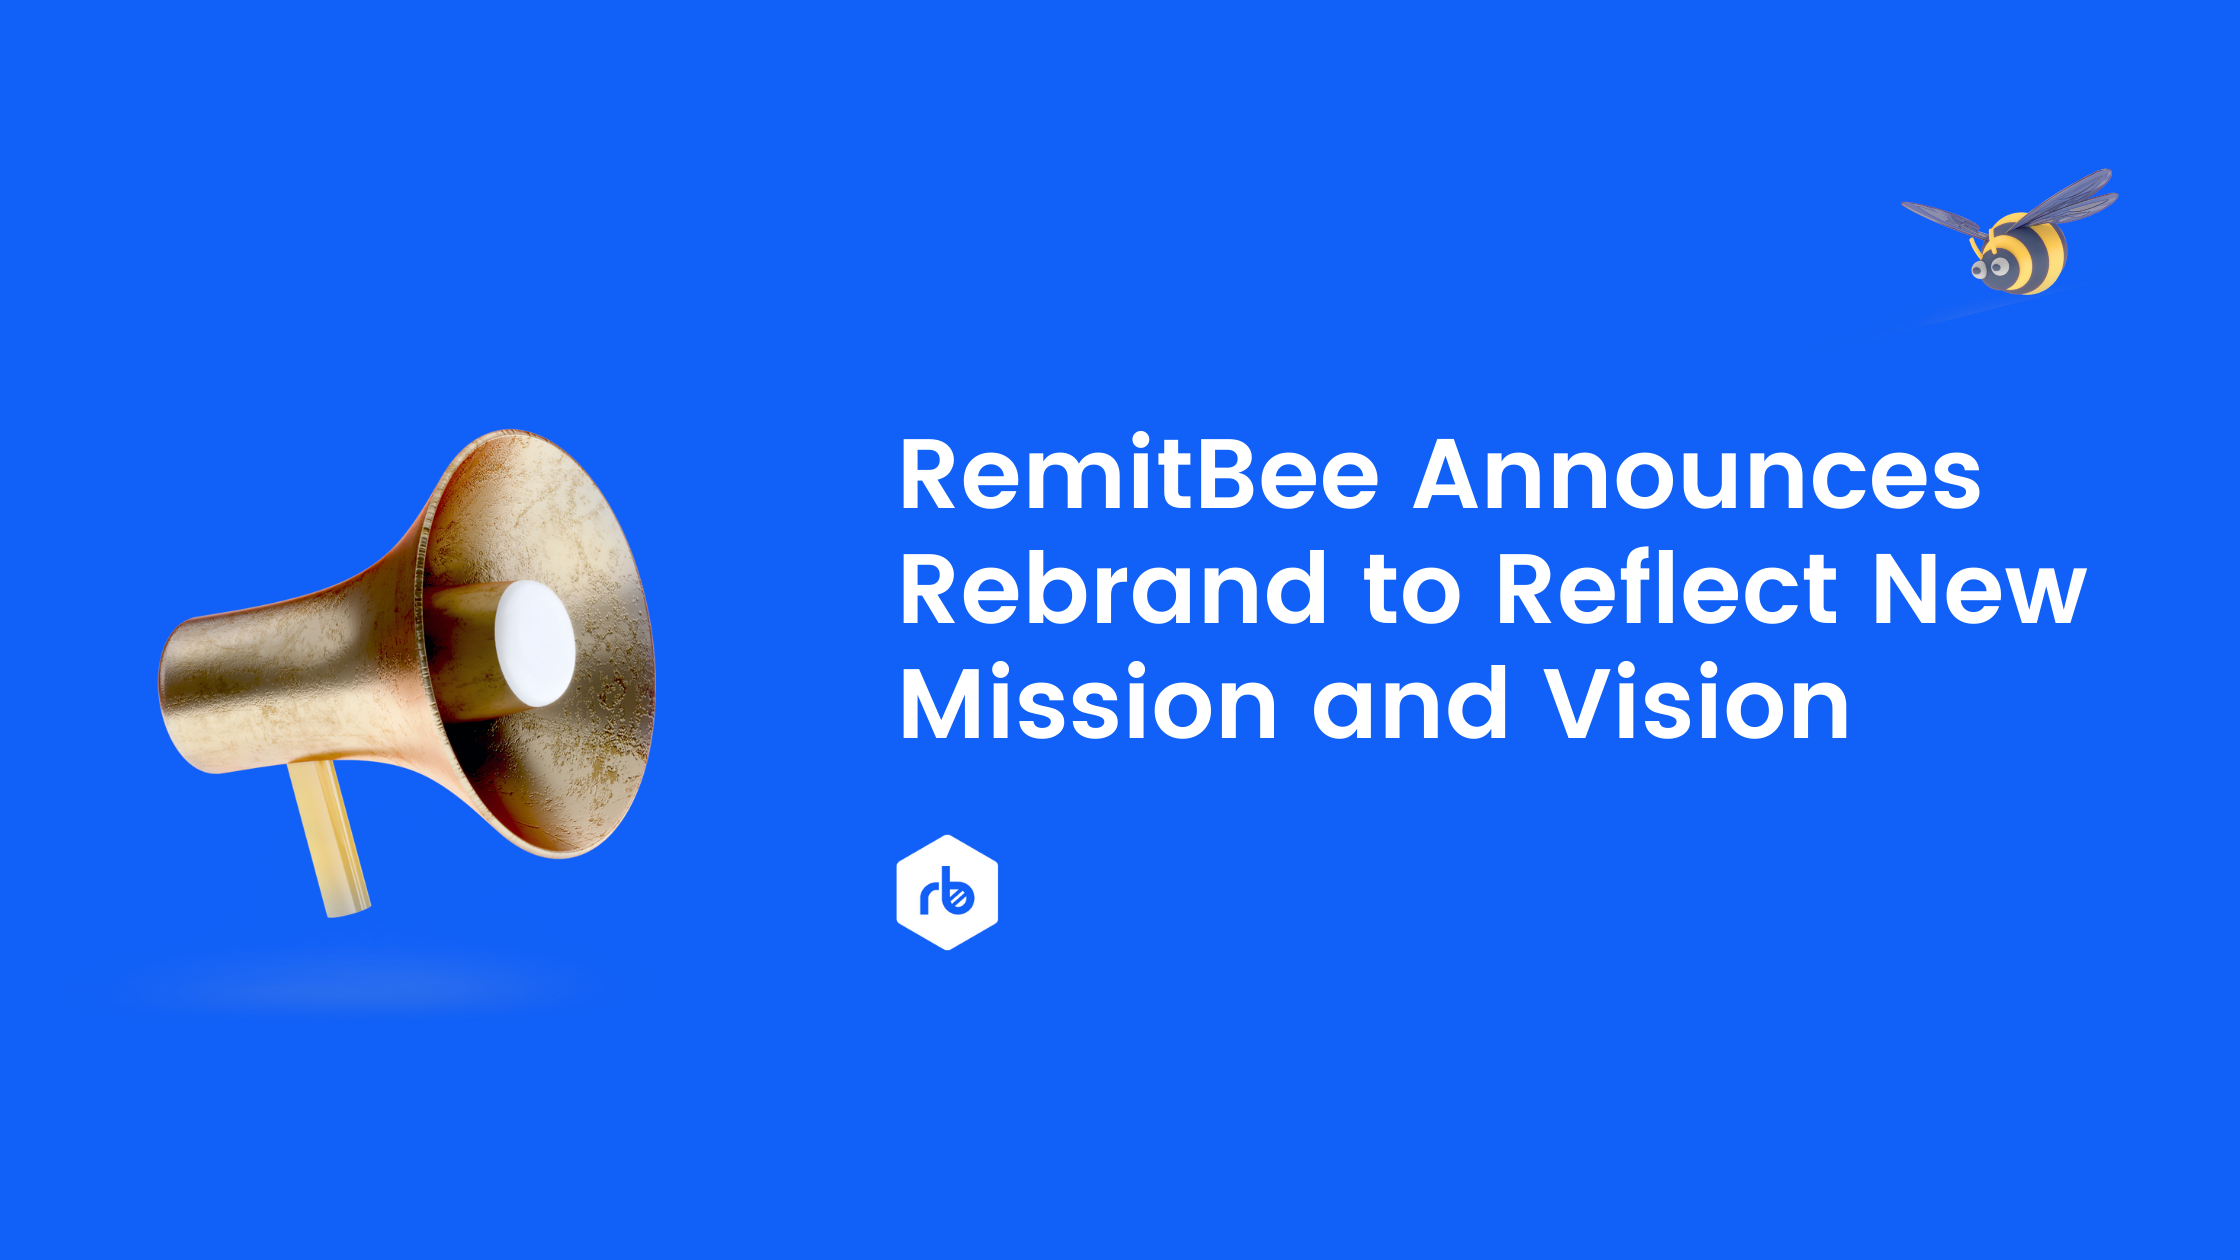 Remitbee's fresh new rebrand!